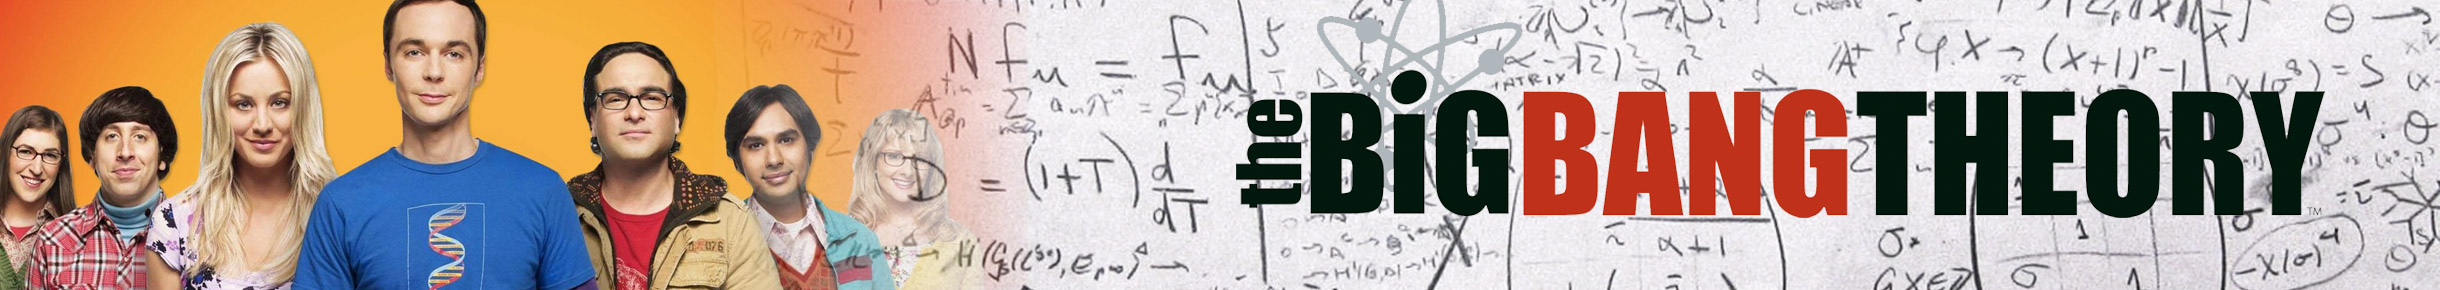 Big Bang Theory Merchandise Banner